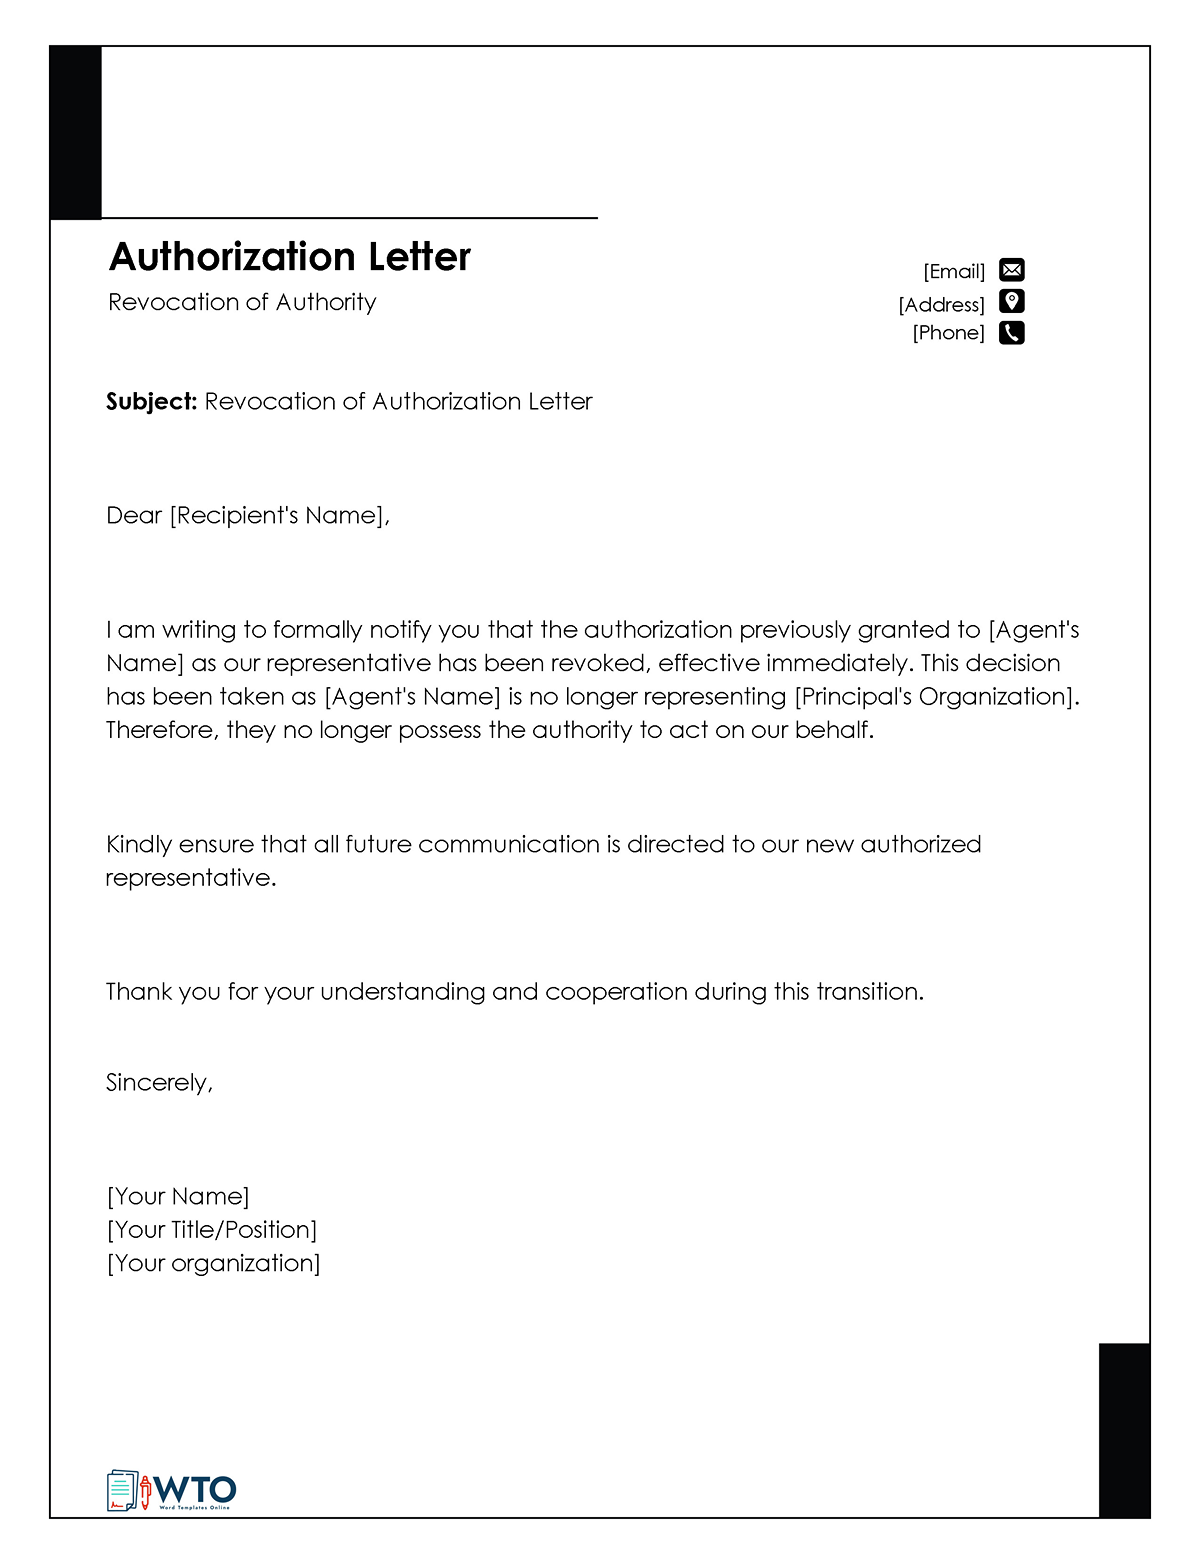 Revoke Authorization LetterTemplate-Downloadable word format